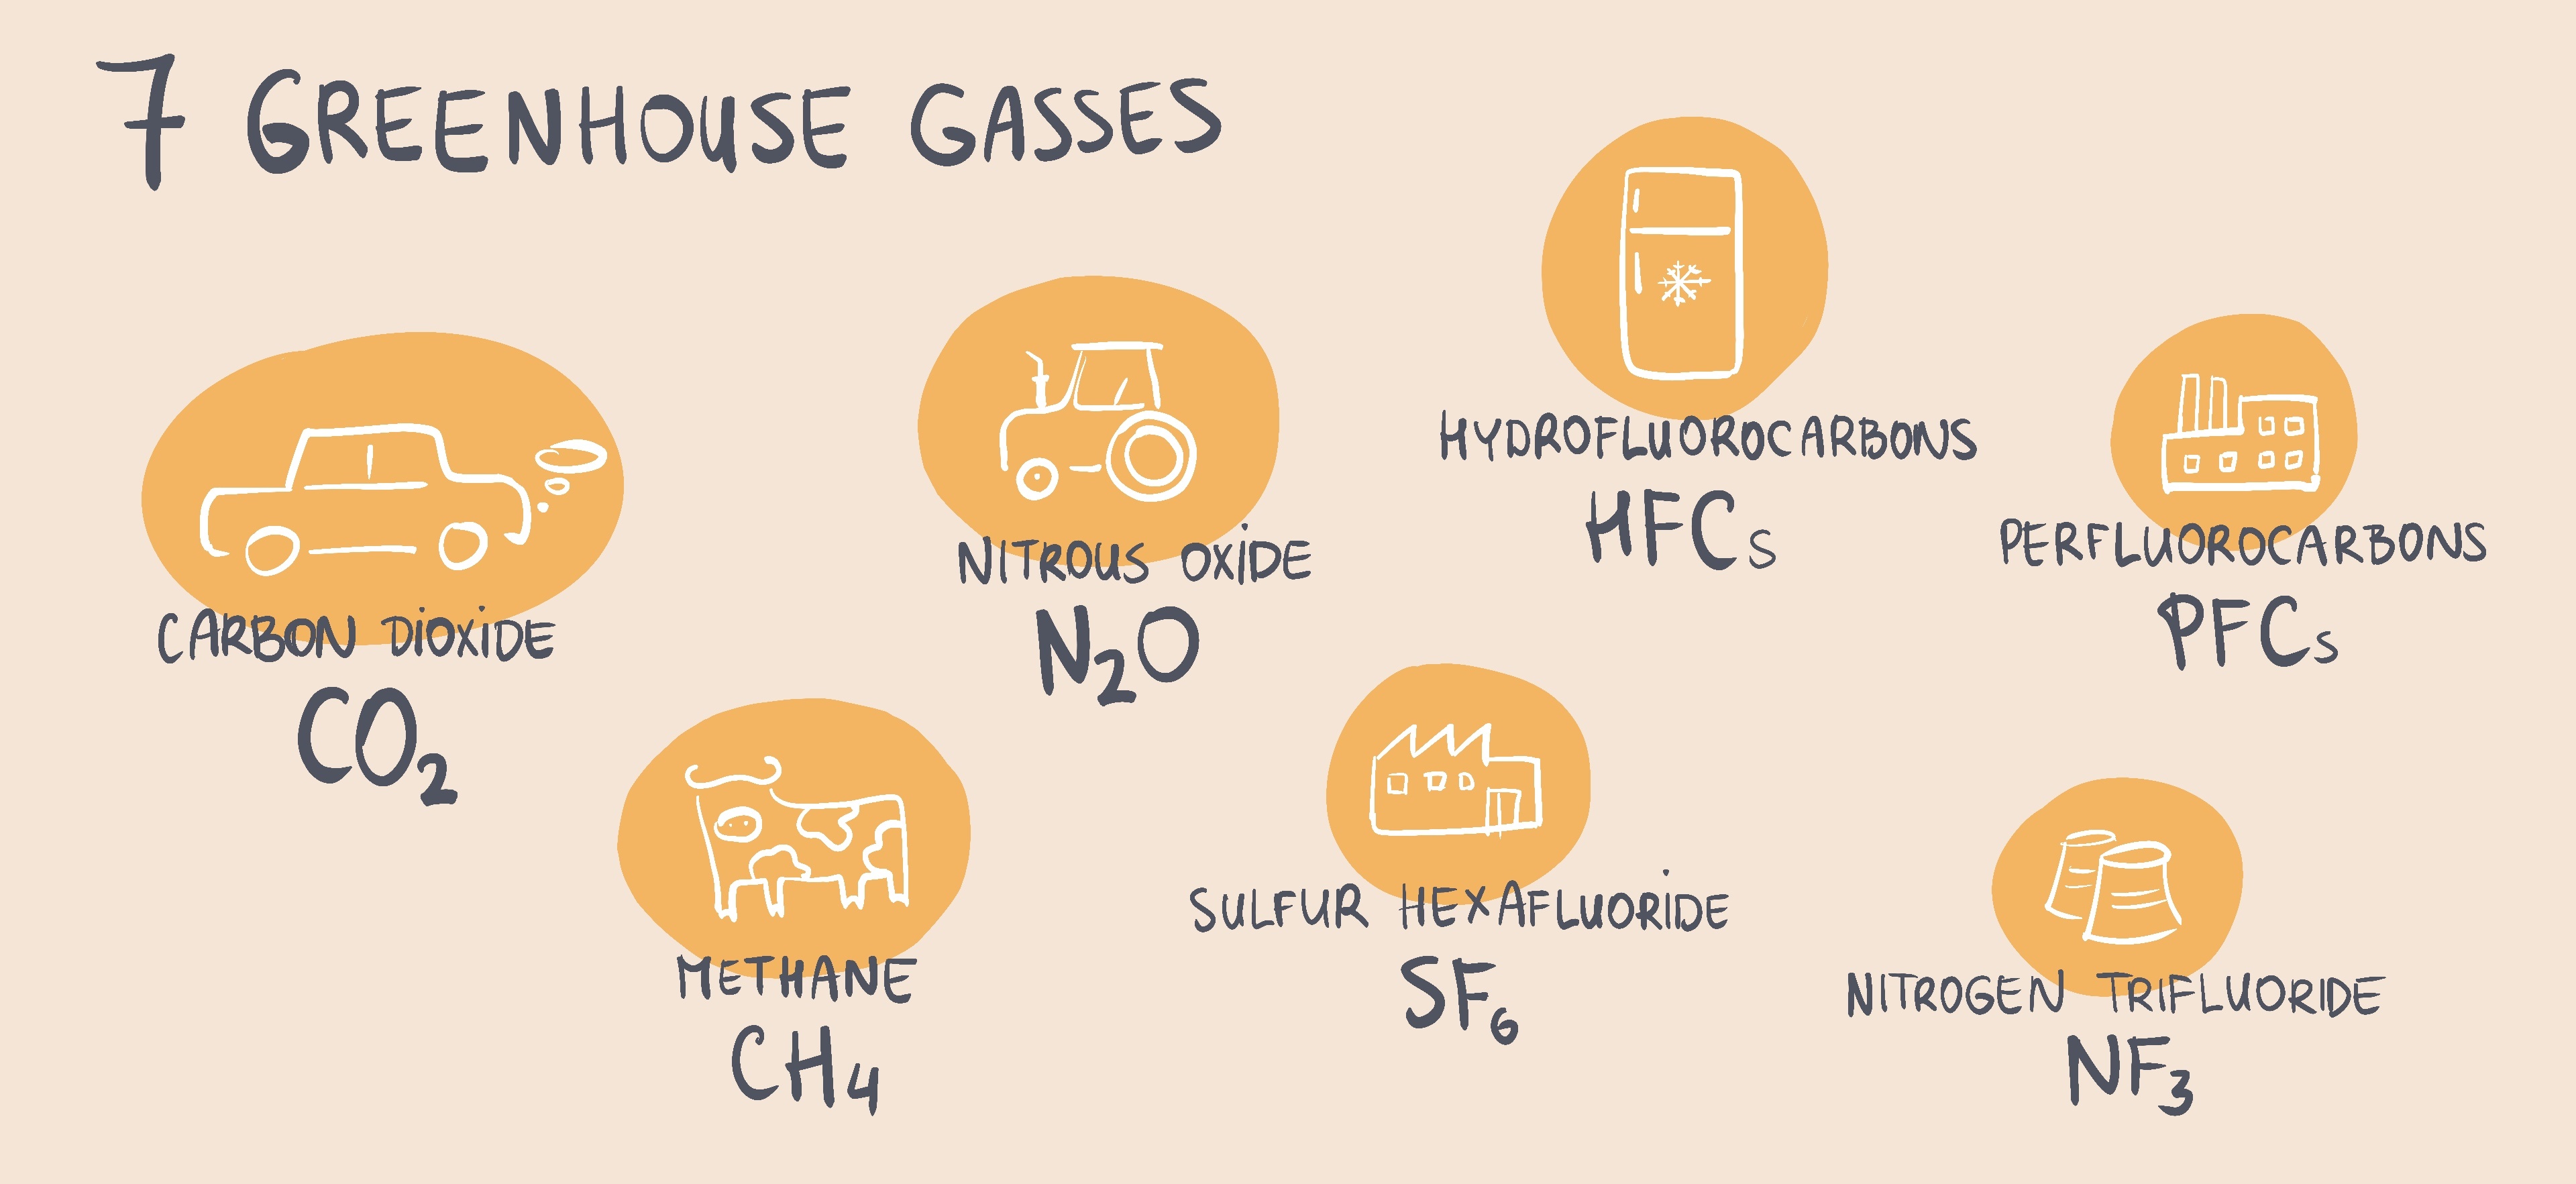 7 greenhouse gasses